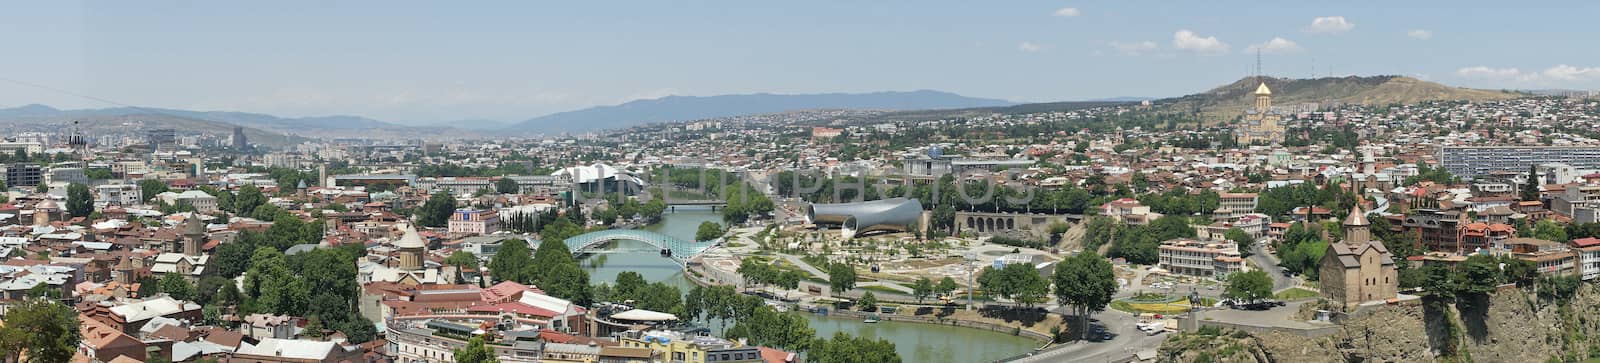 TBILISI, GEORGIA - JUNE 28, 2014: Panorama view over Tbilisi on June 28, 2014 in Georgia, East Europe